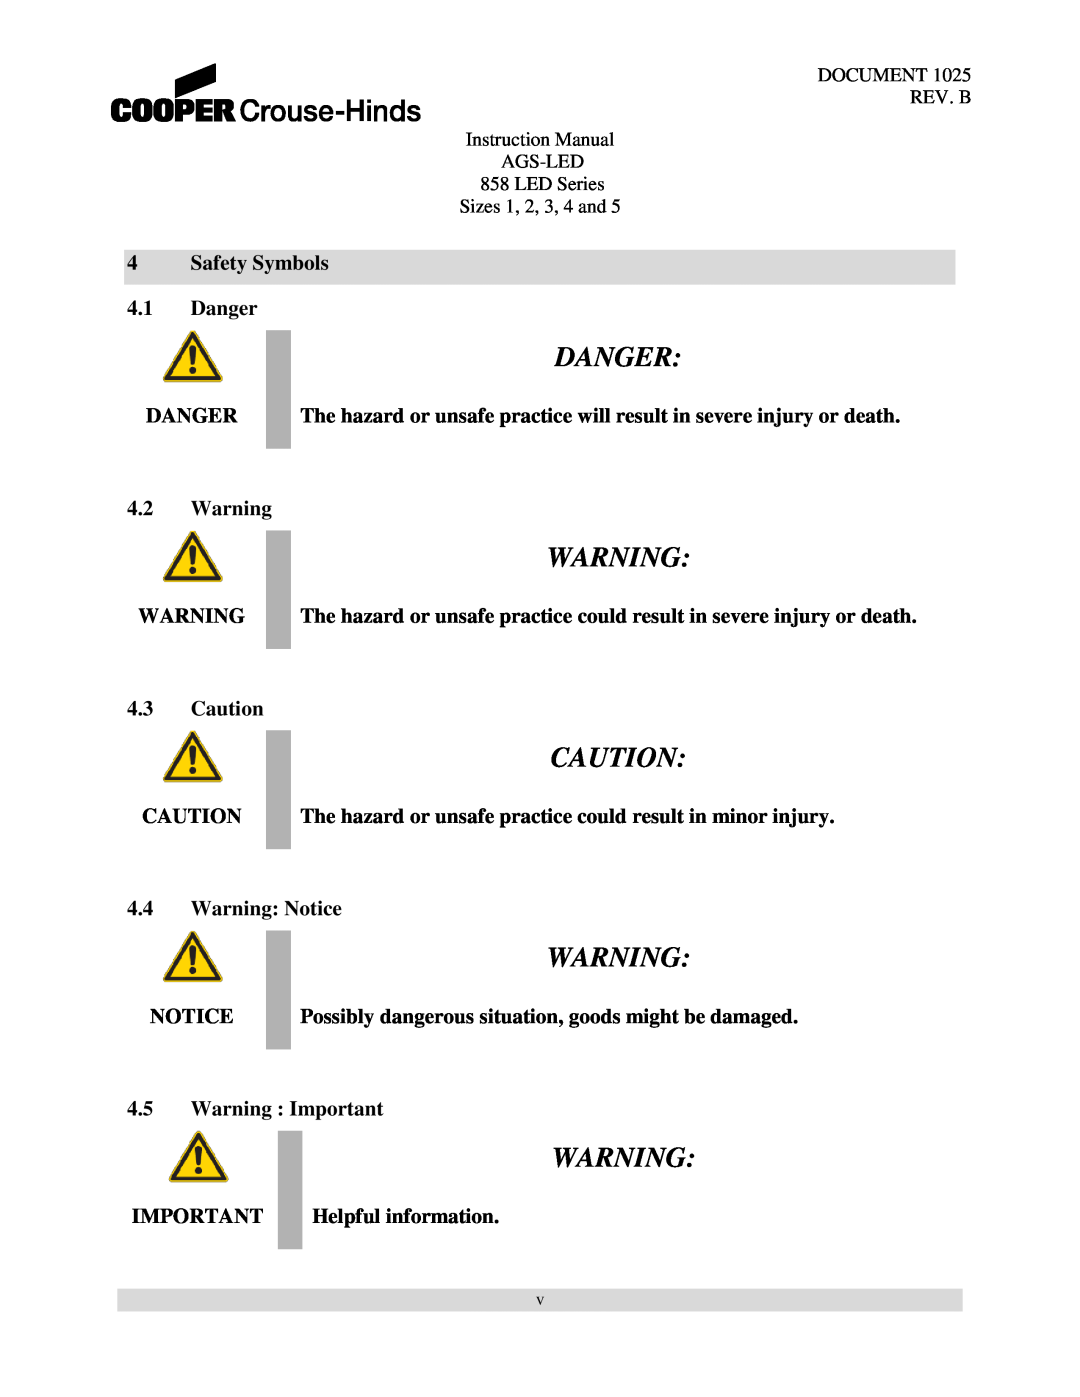 Cooper Bussmann 858 Safety Symbols 4.1Danger, 4.2Warning, 4.3Caution, 4.4Warning: Notice, 4.5Warning : Important 